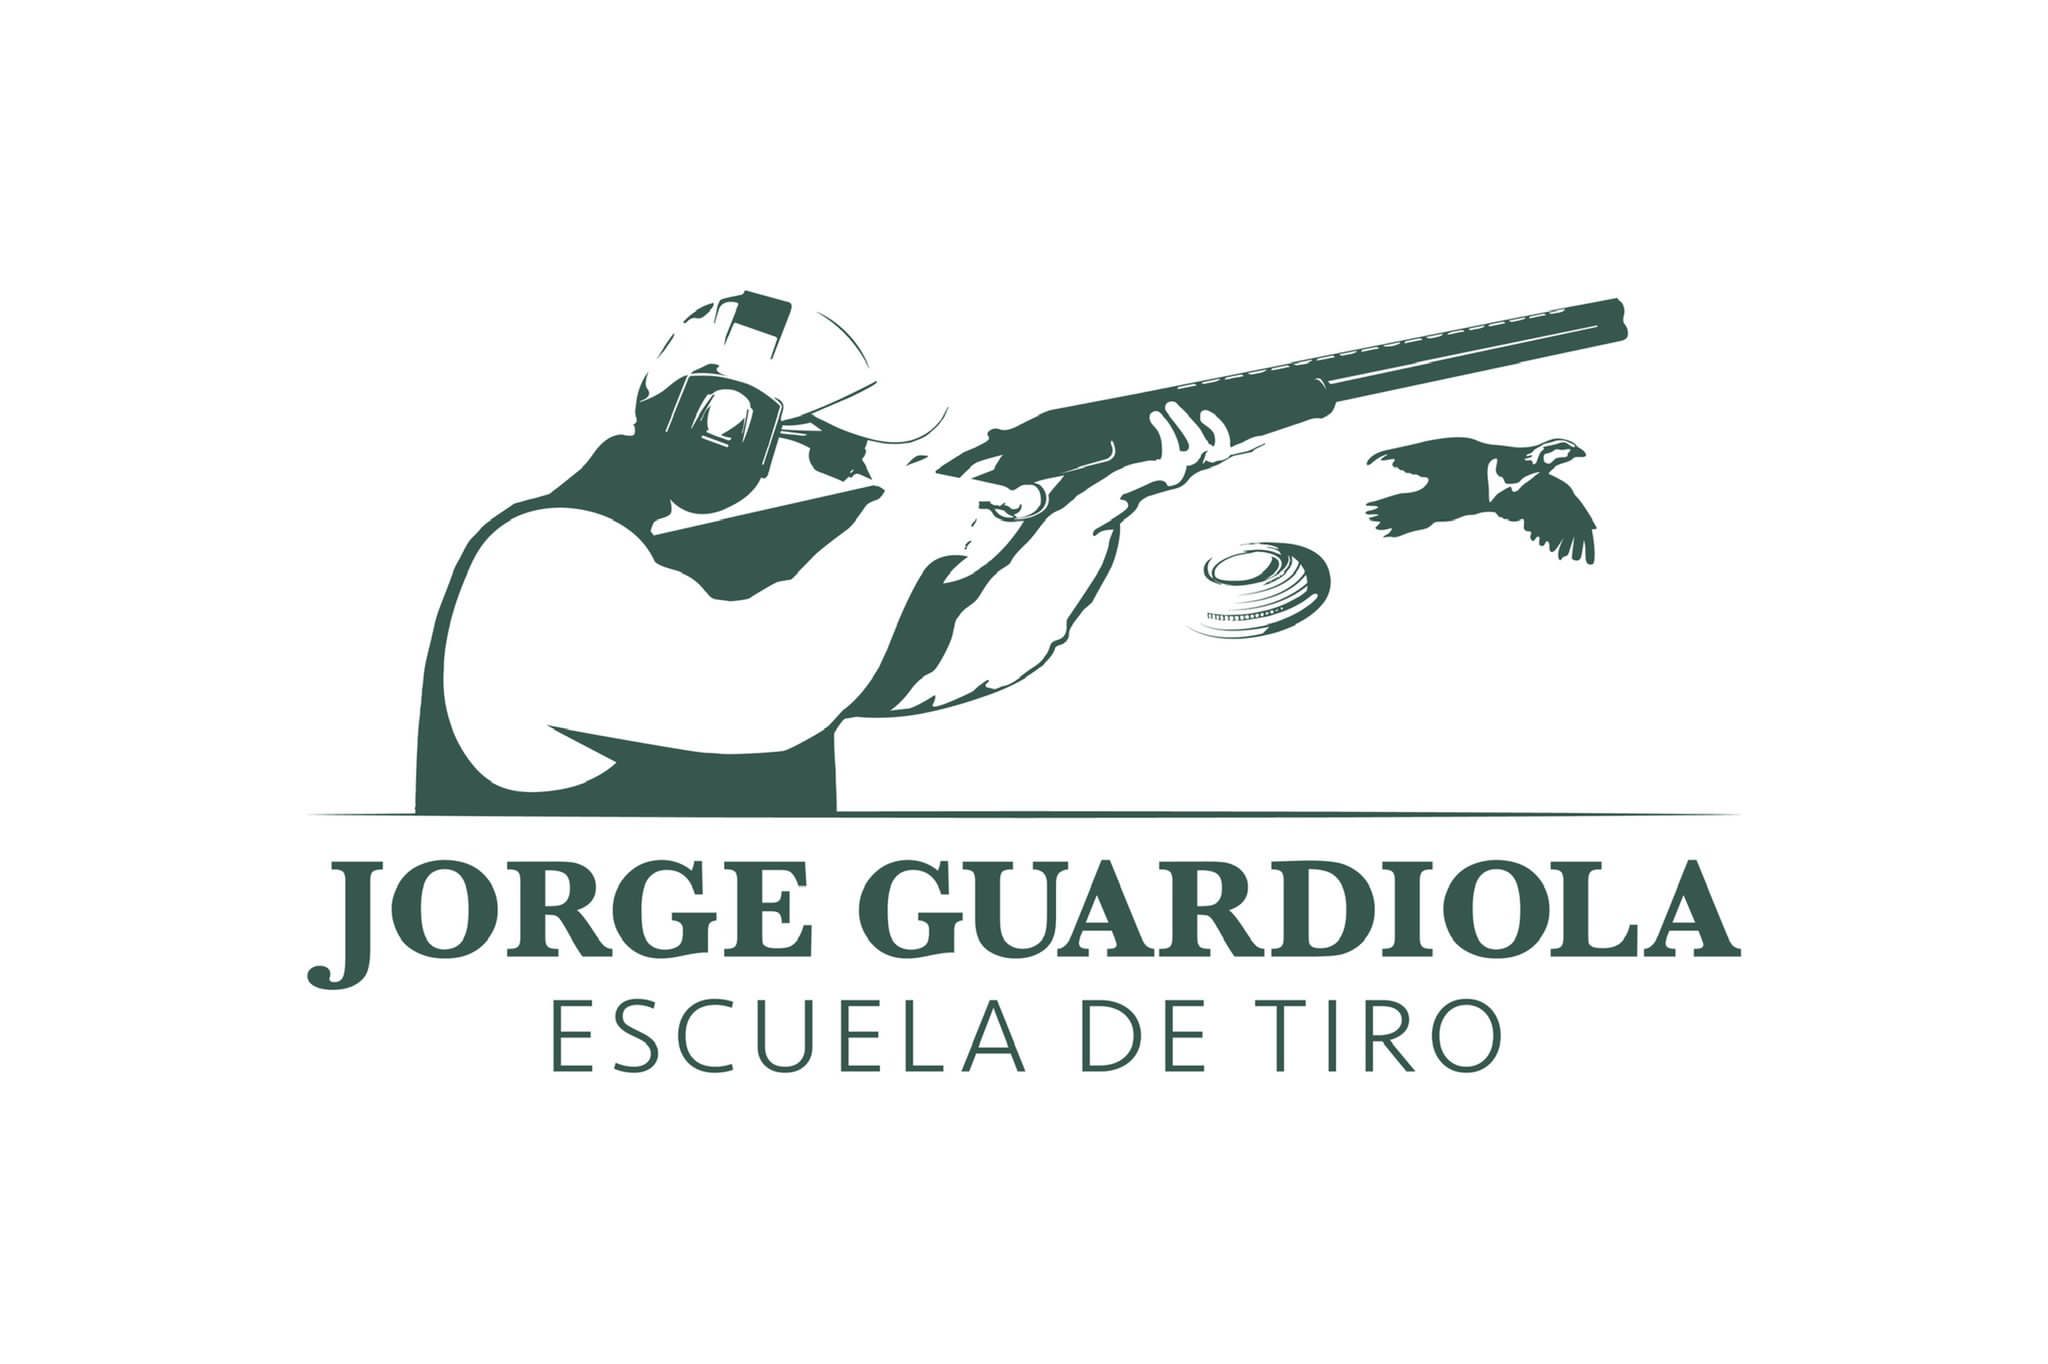 Escuela de tiro Jorge Guardiola